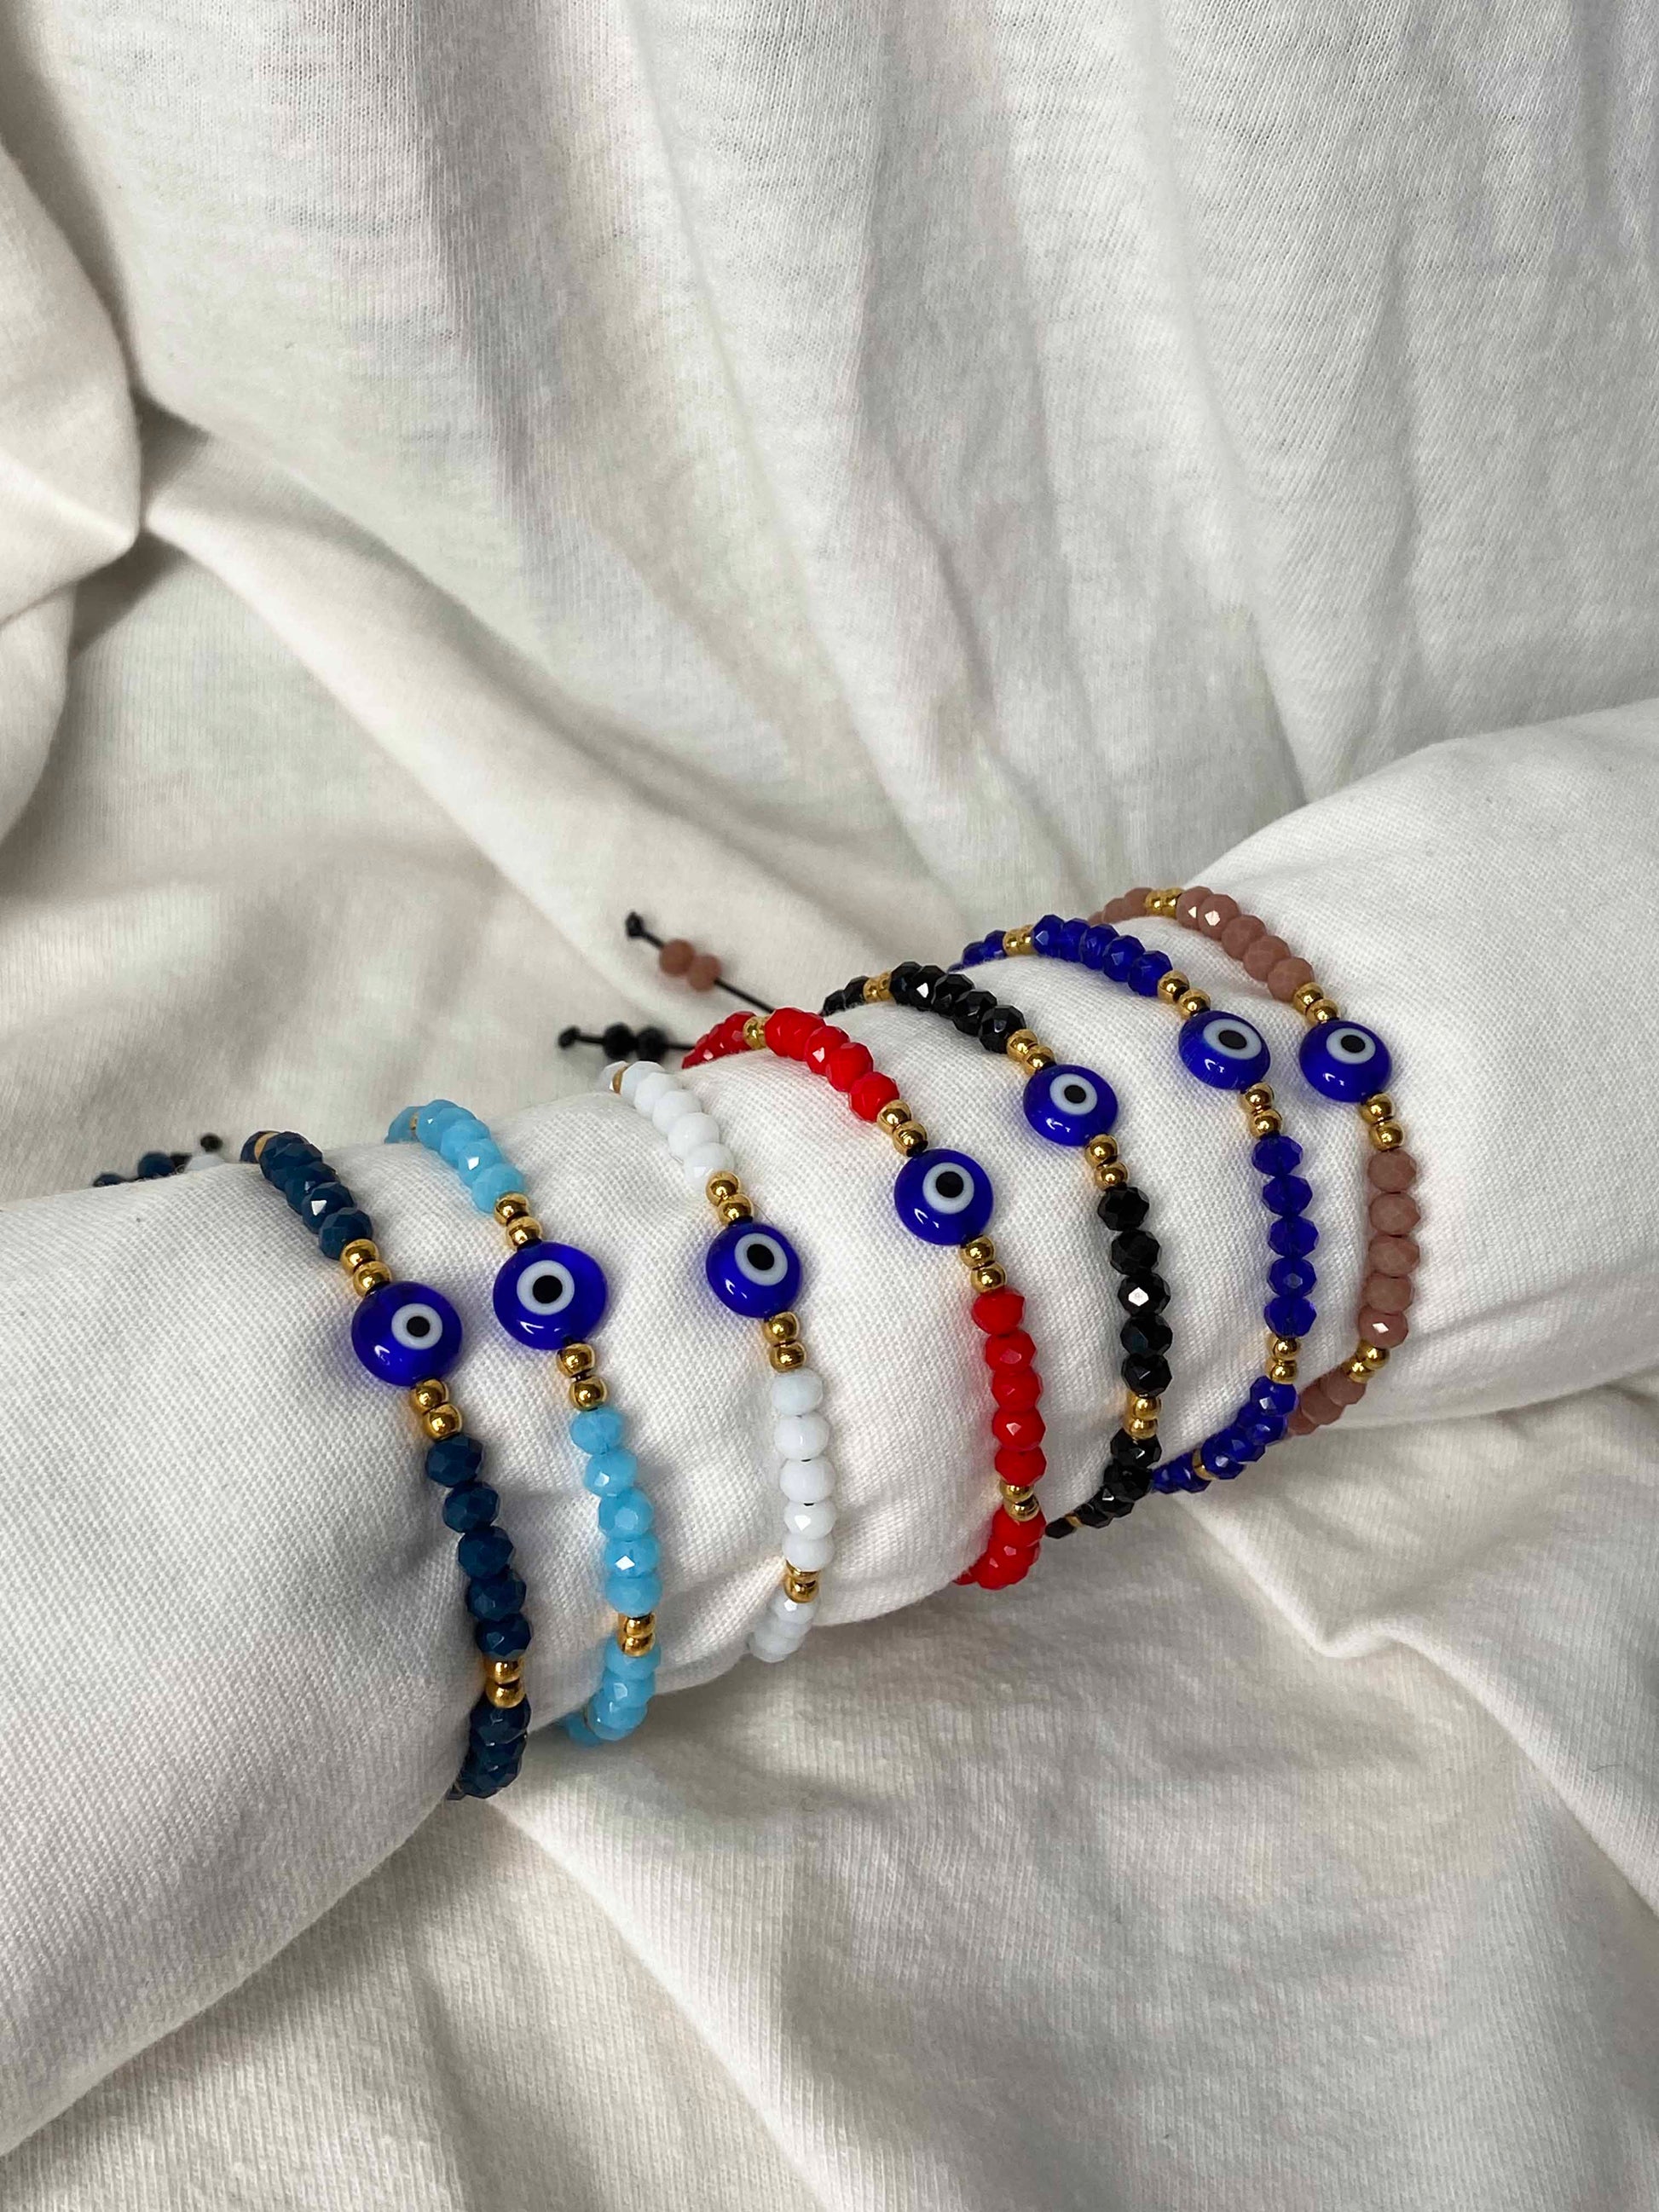 Handmade crystal beaded nazar amulet bracelets with sliding knot ties. 